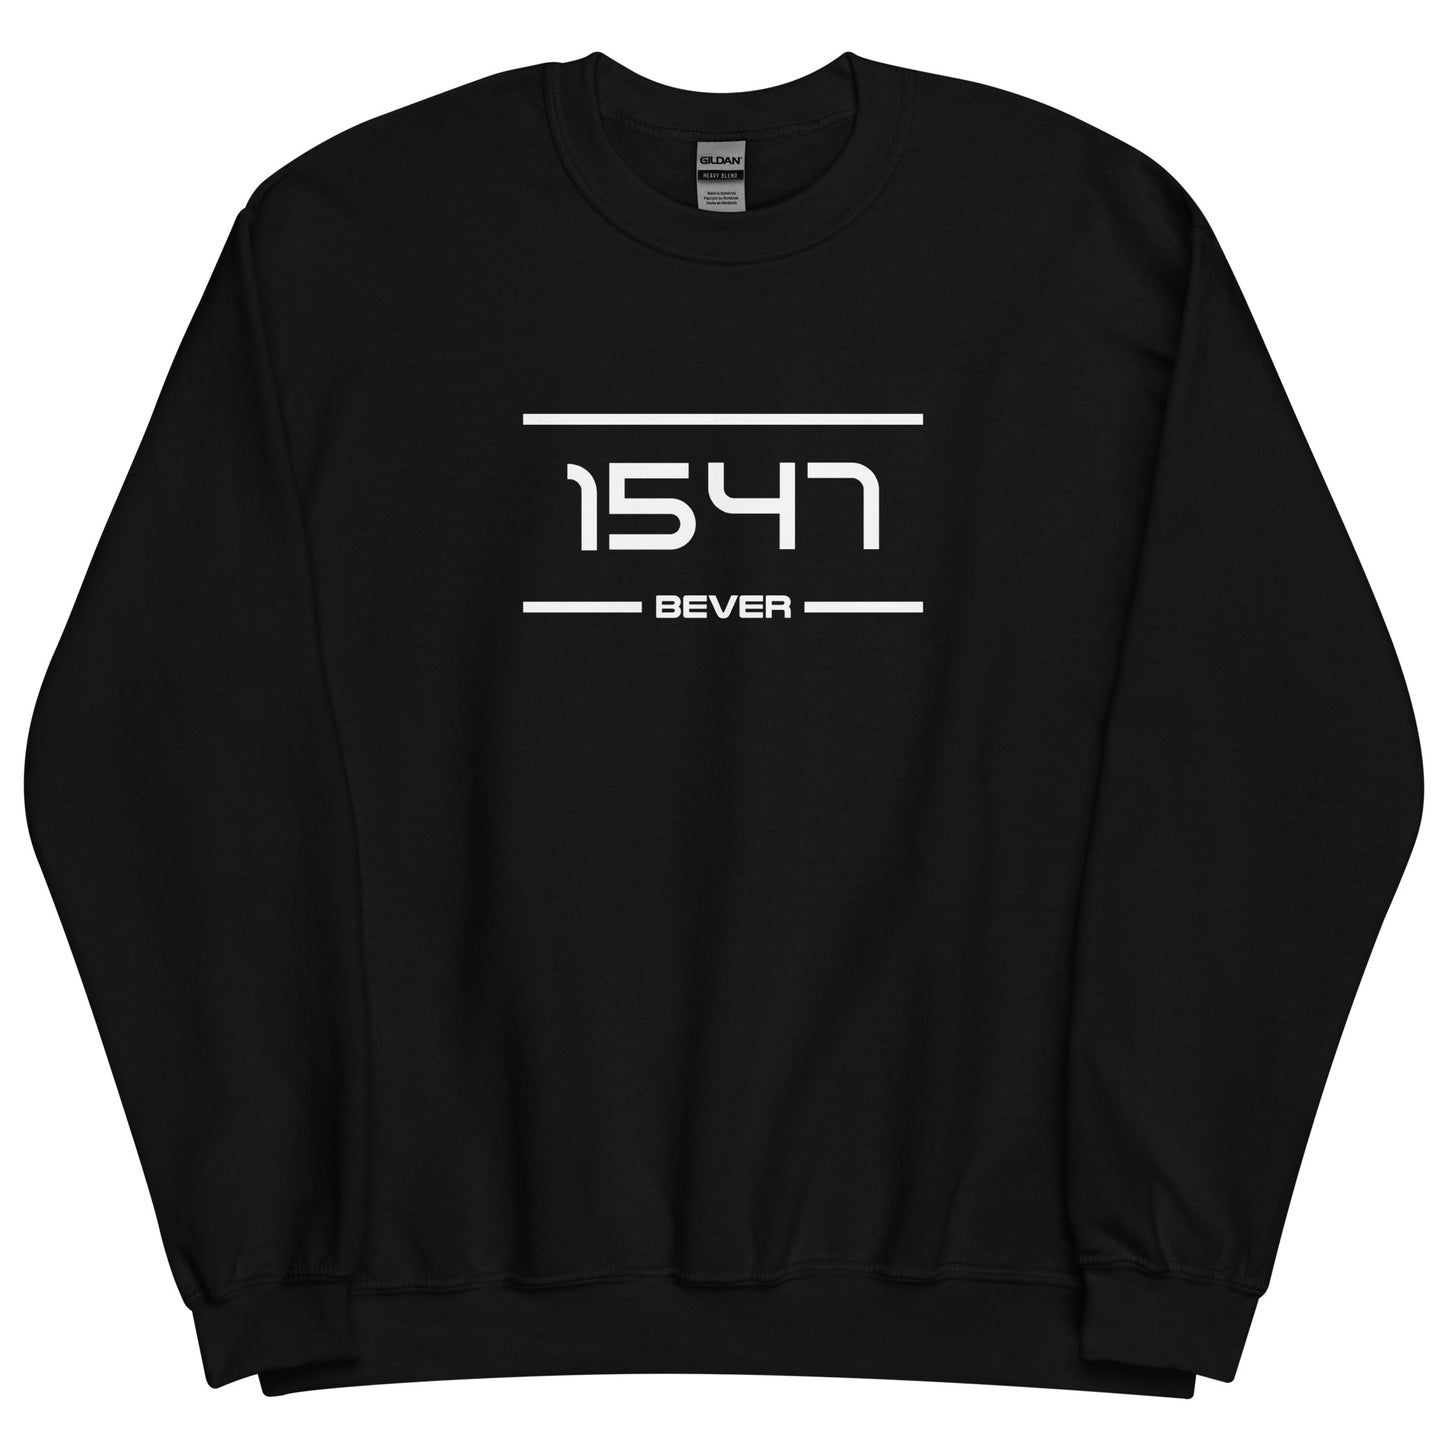 Sweater - 1547 - Bever (M/V)